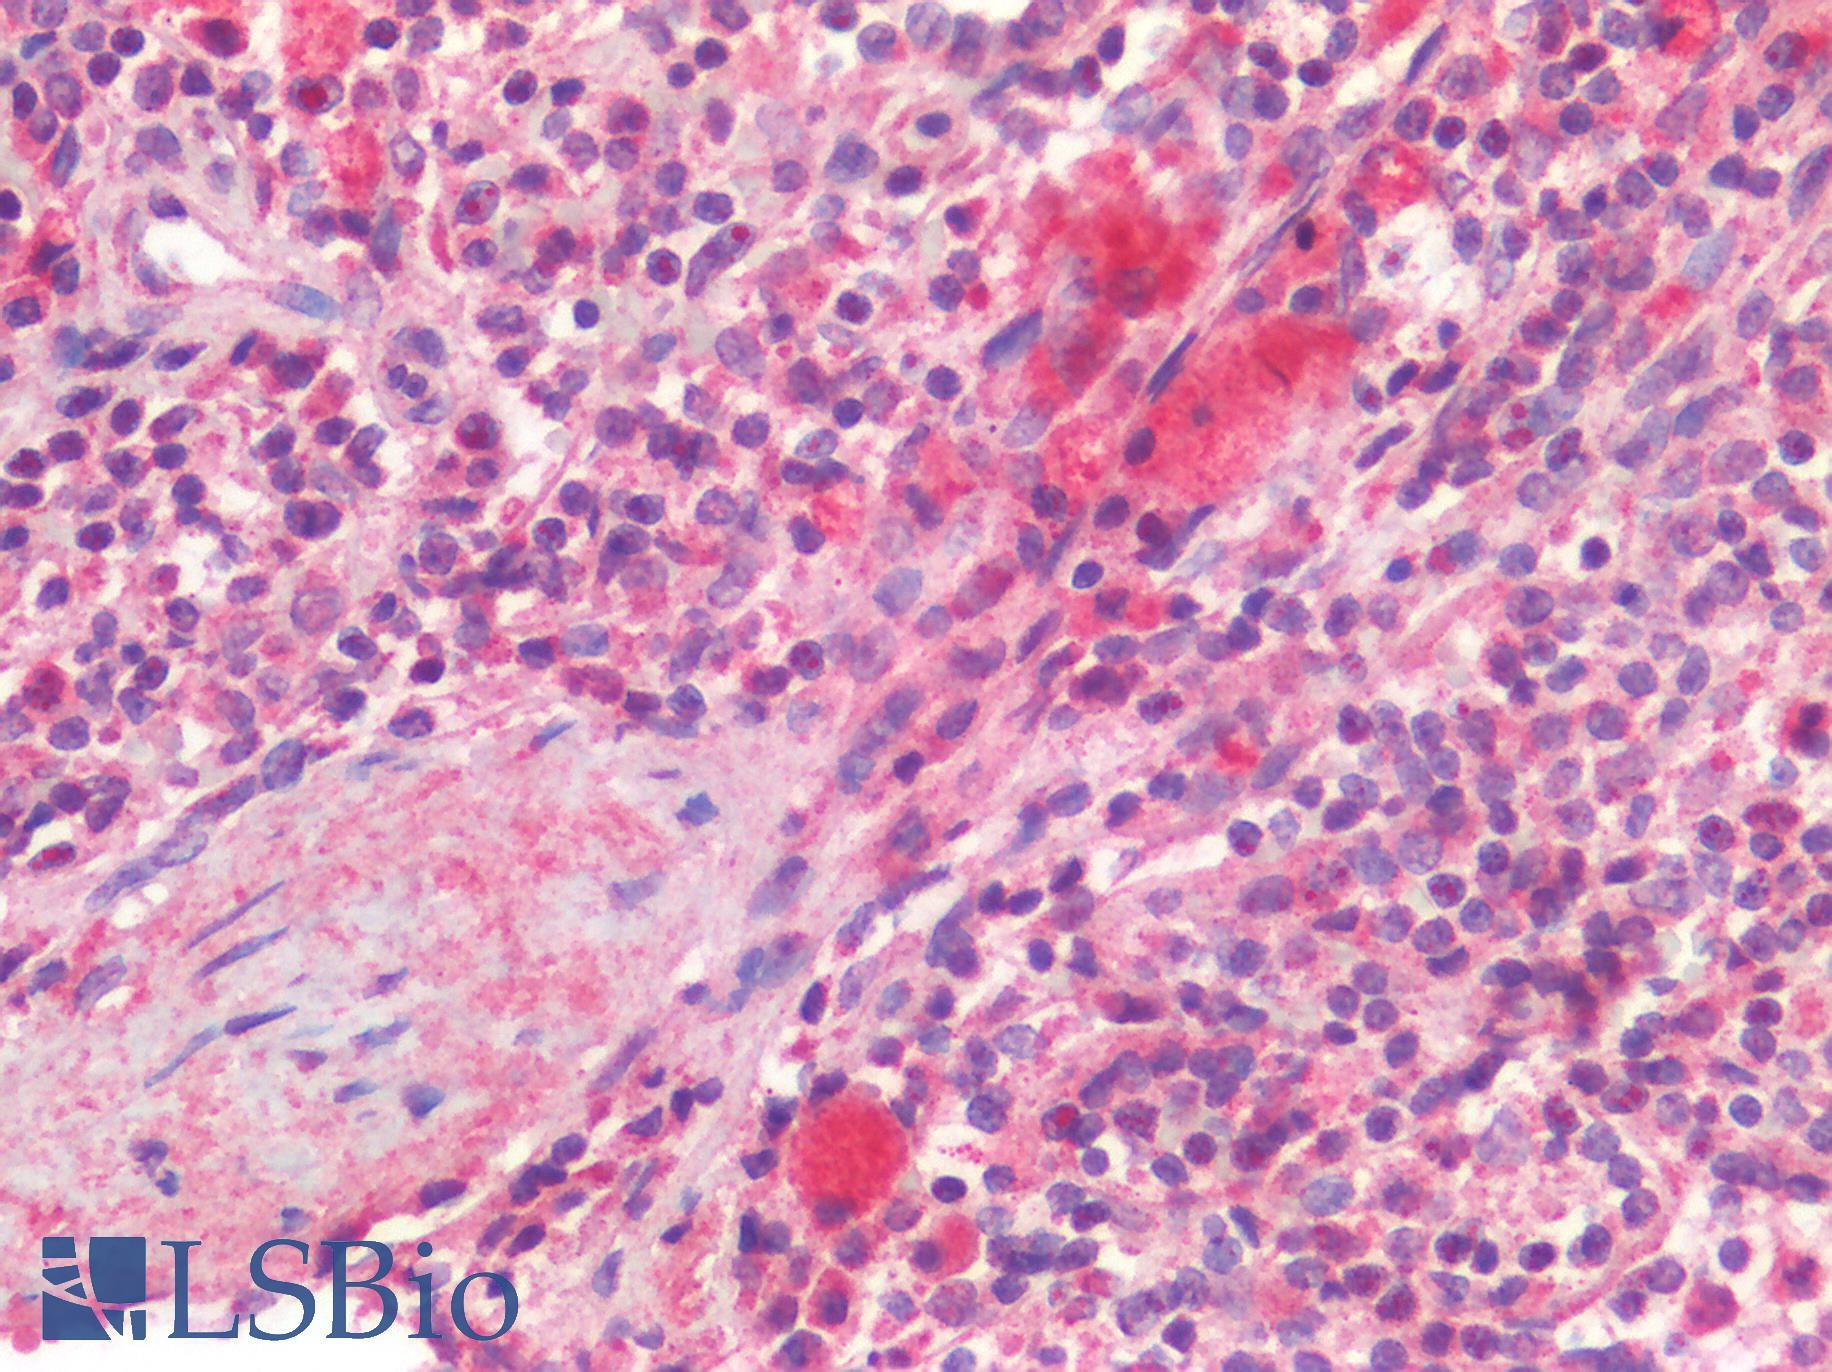 CD63 Antibody - Human Spleen: Formalin-Fixed, Paraffin-Embedded (FFPE)